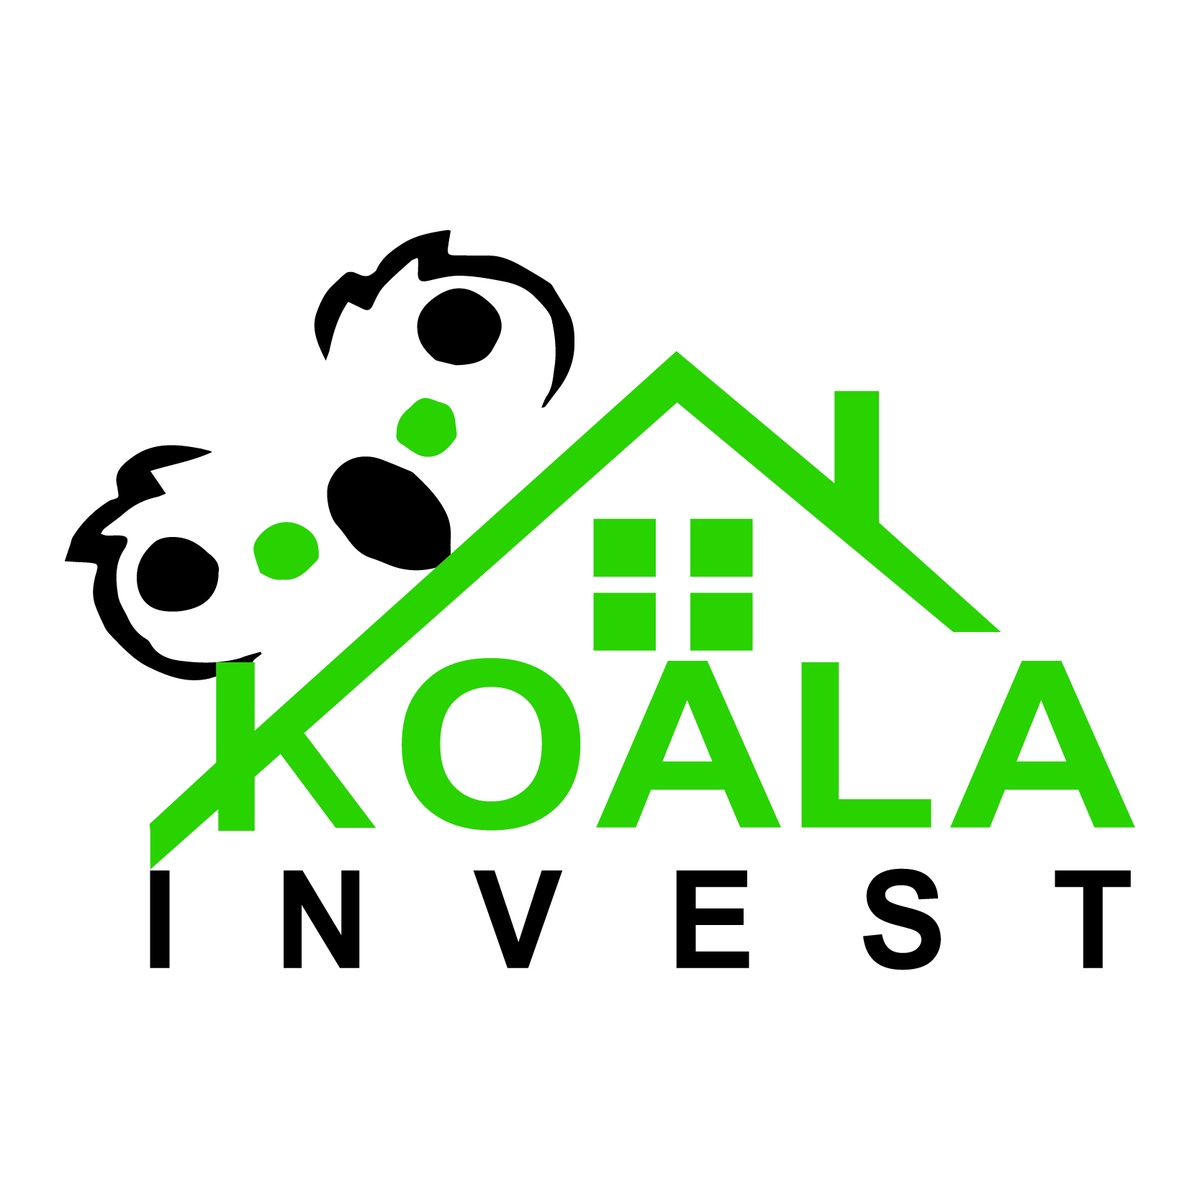 KOALA INVEST: Navigating Property Investment in Australia's Thriving Real Estate Landscape"